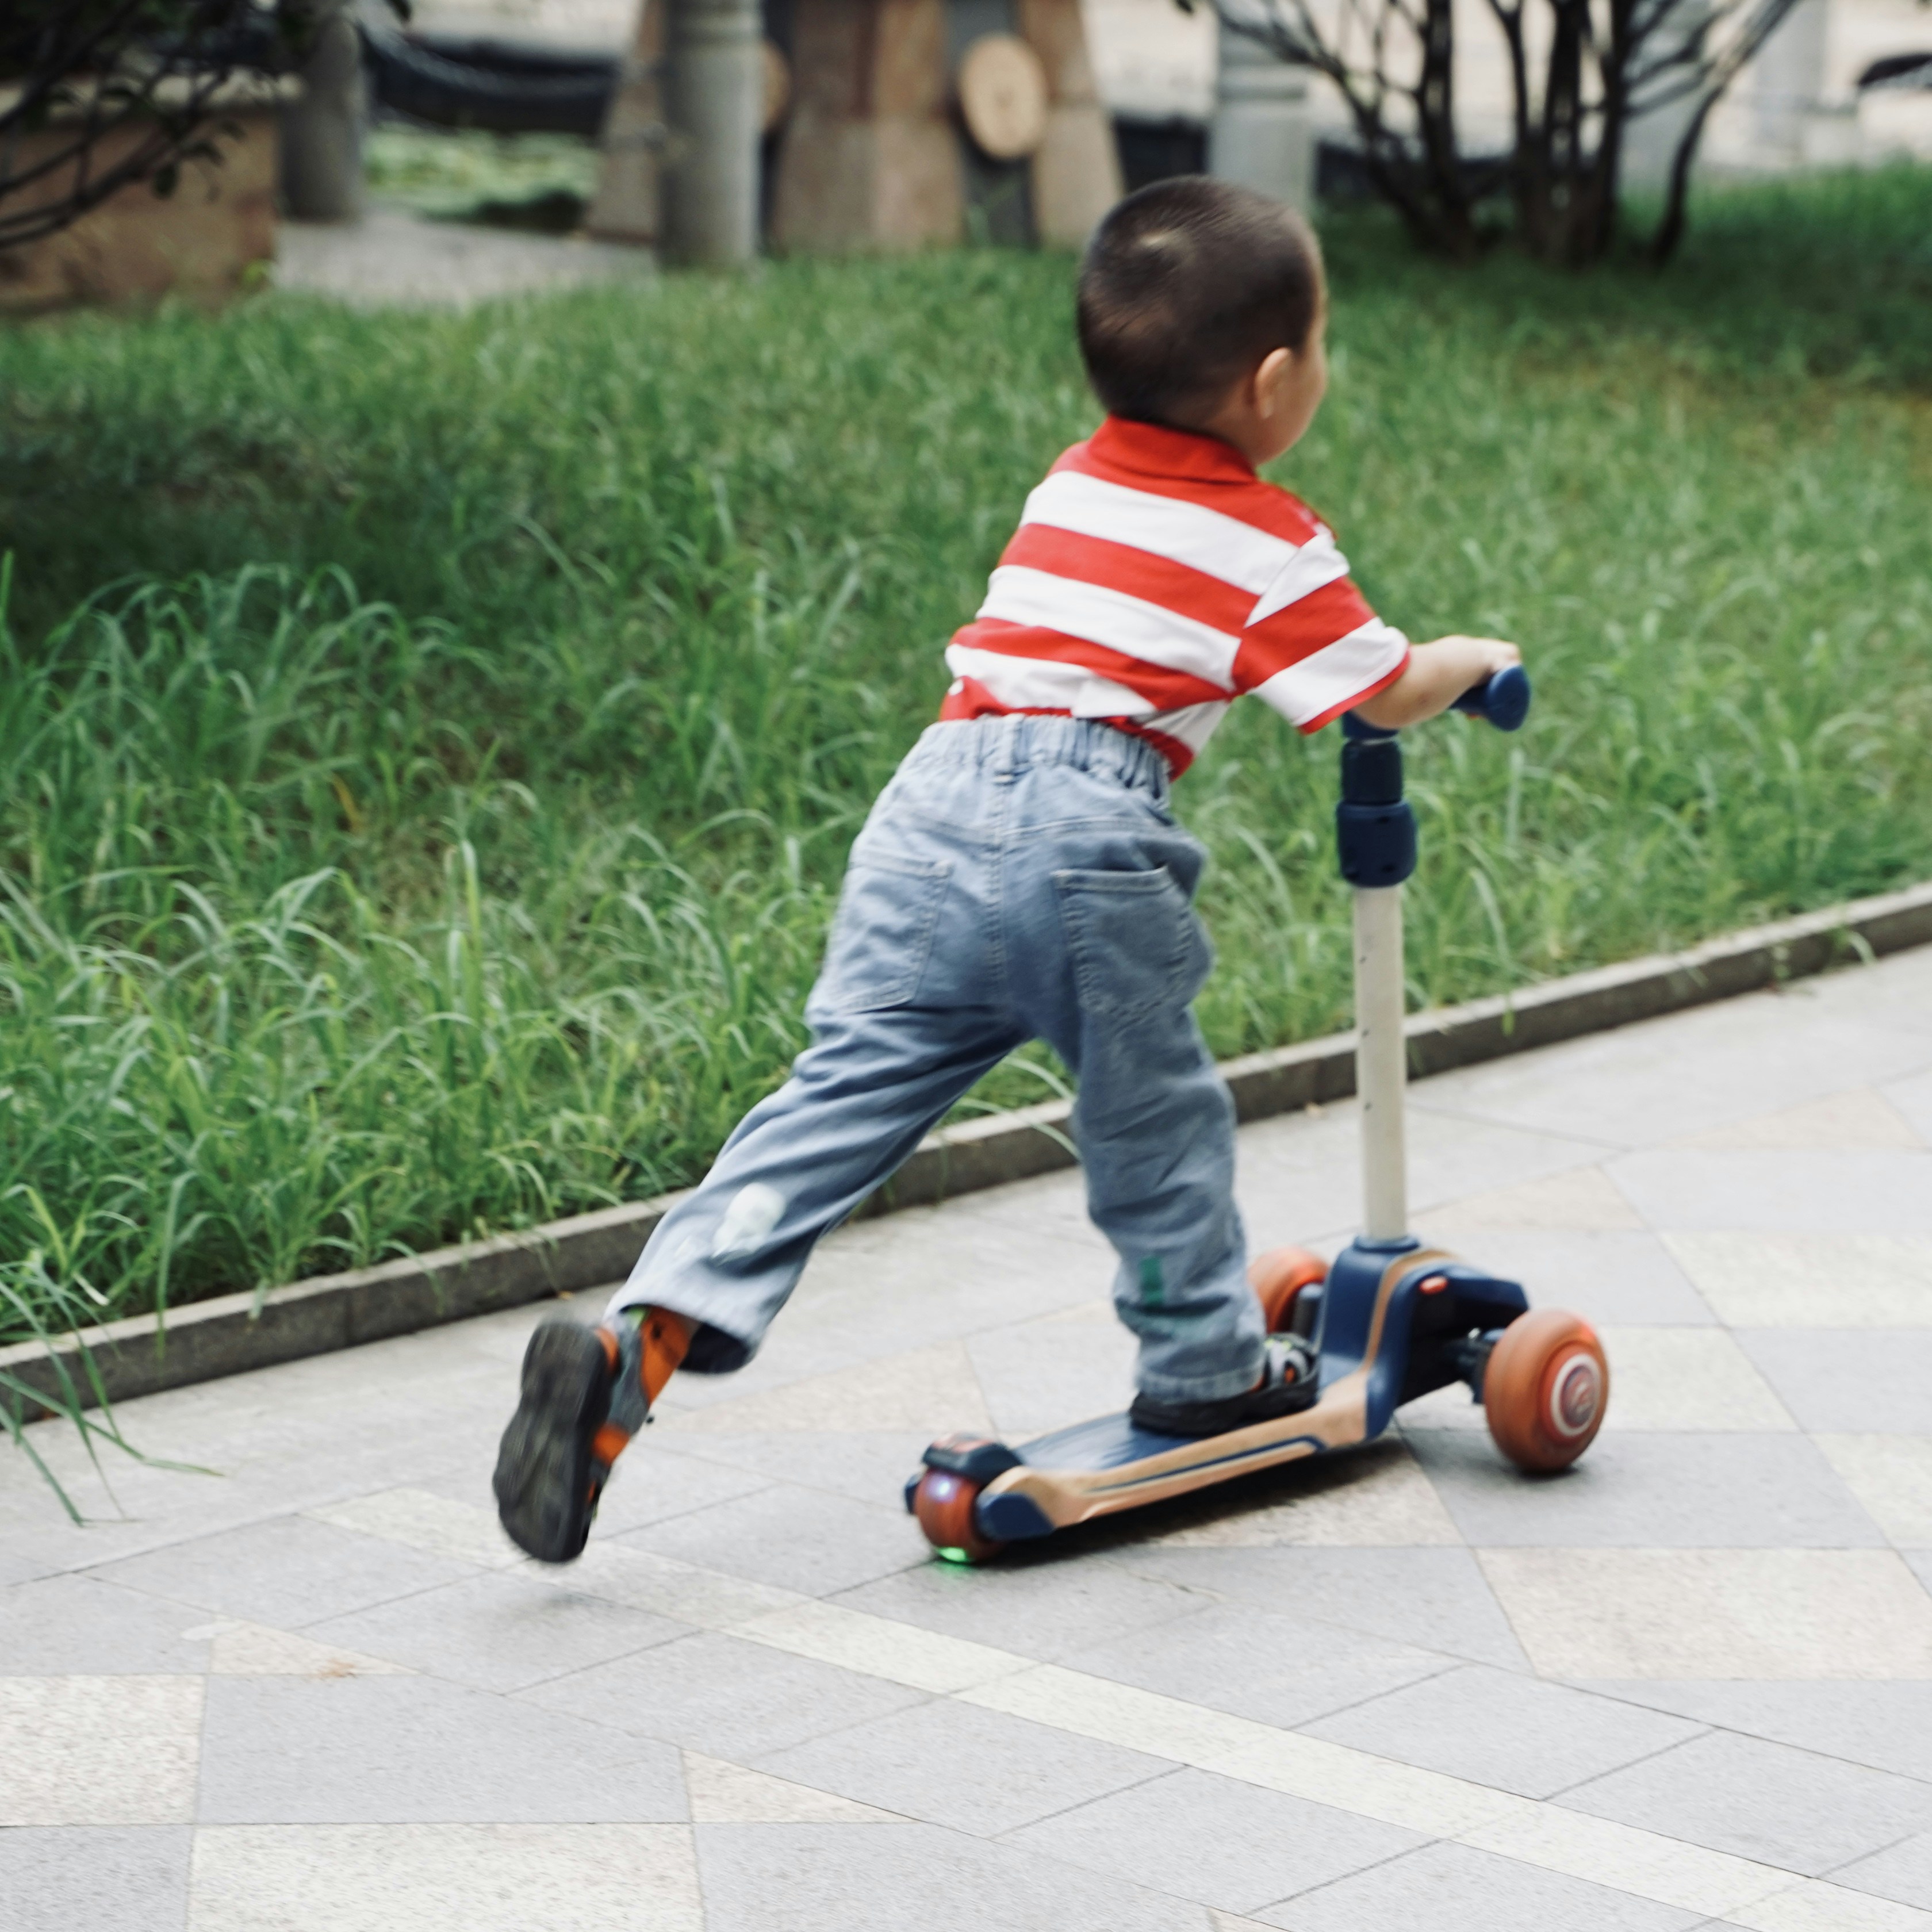 A child playing skateboard